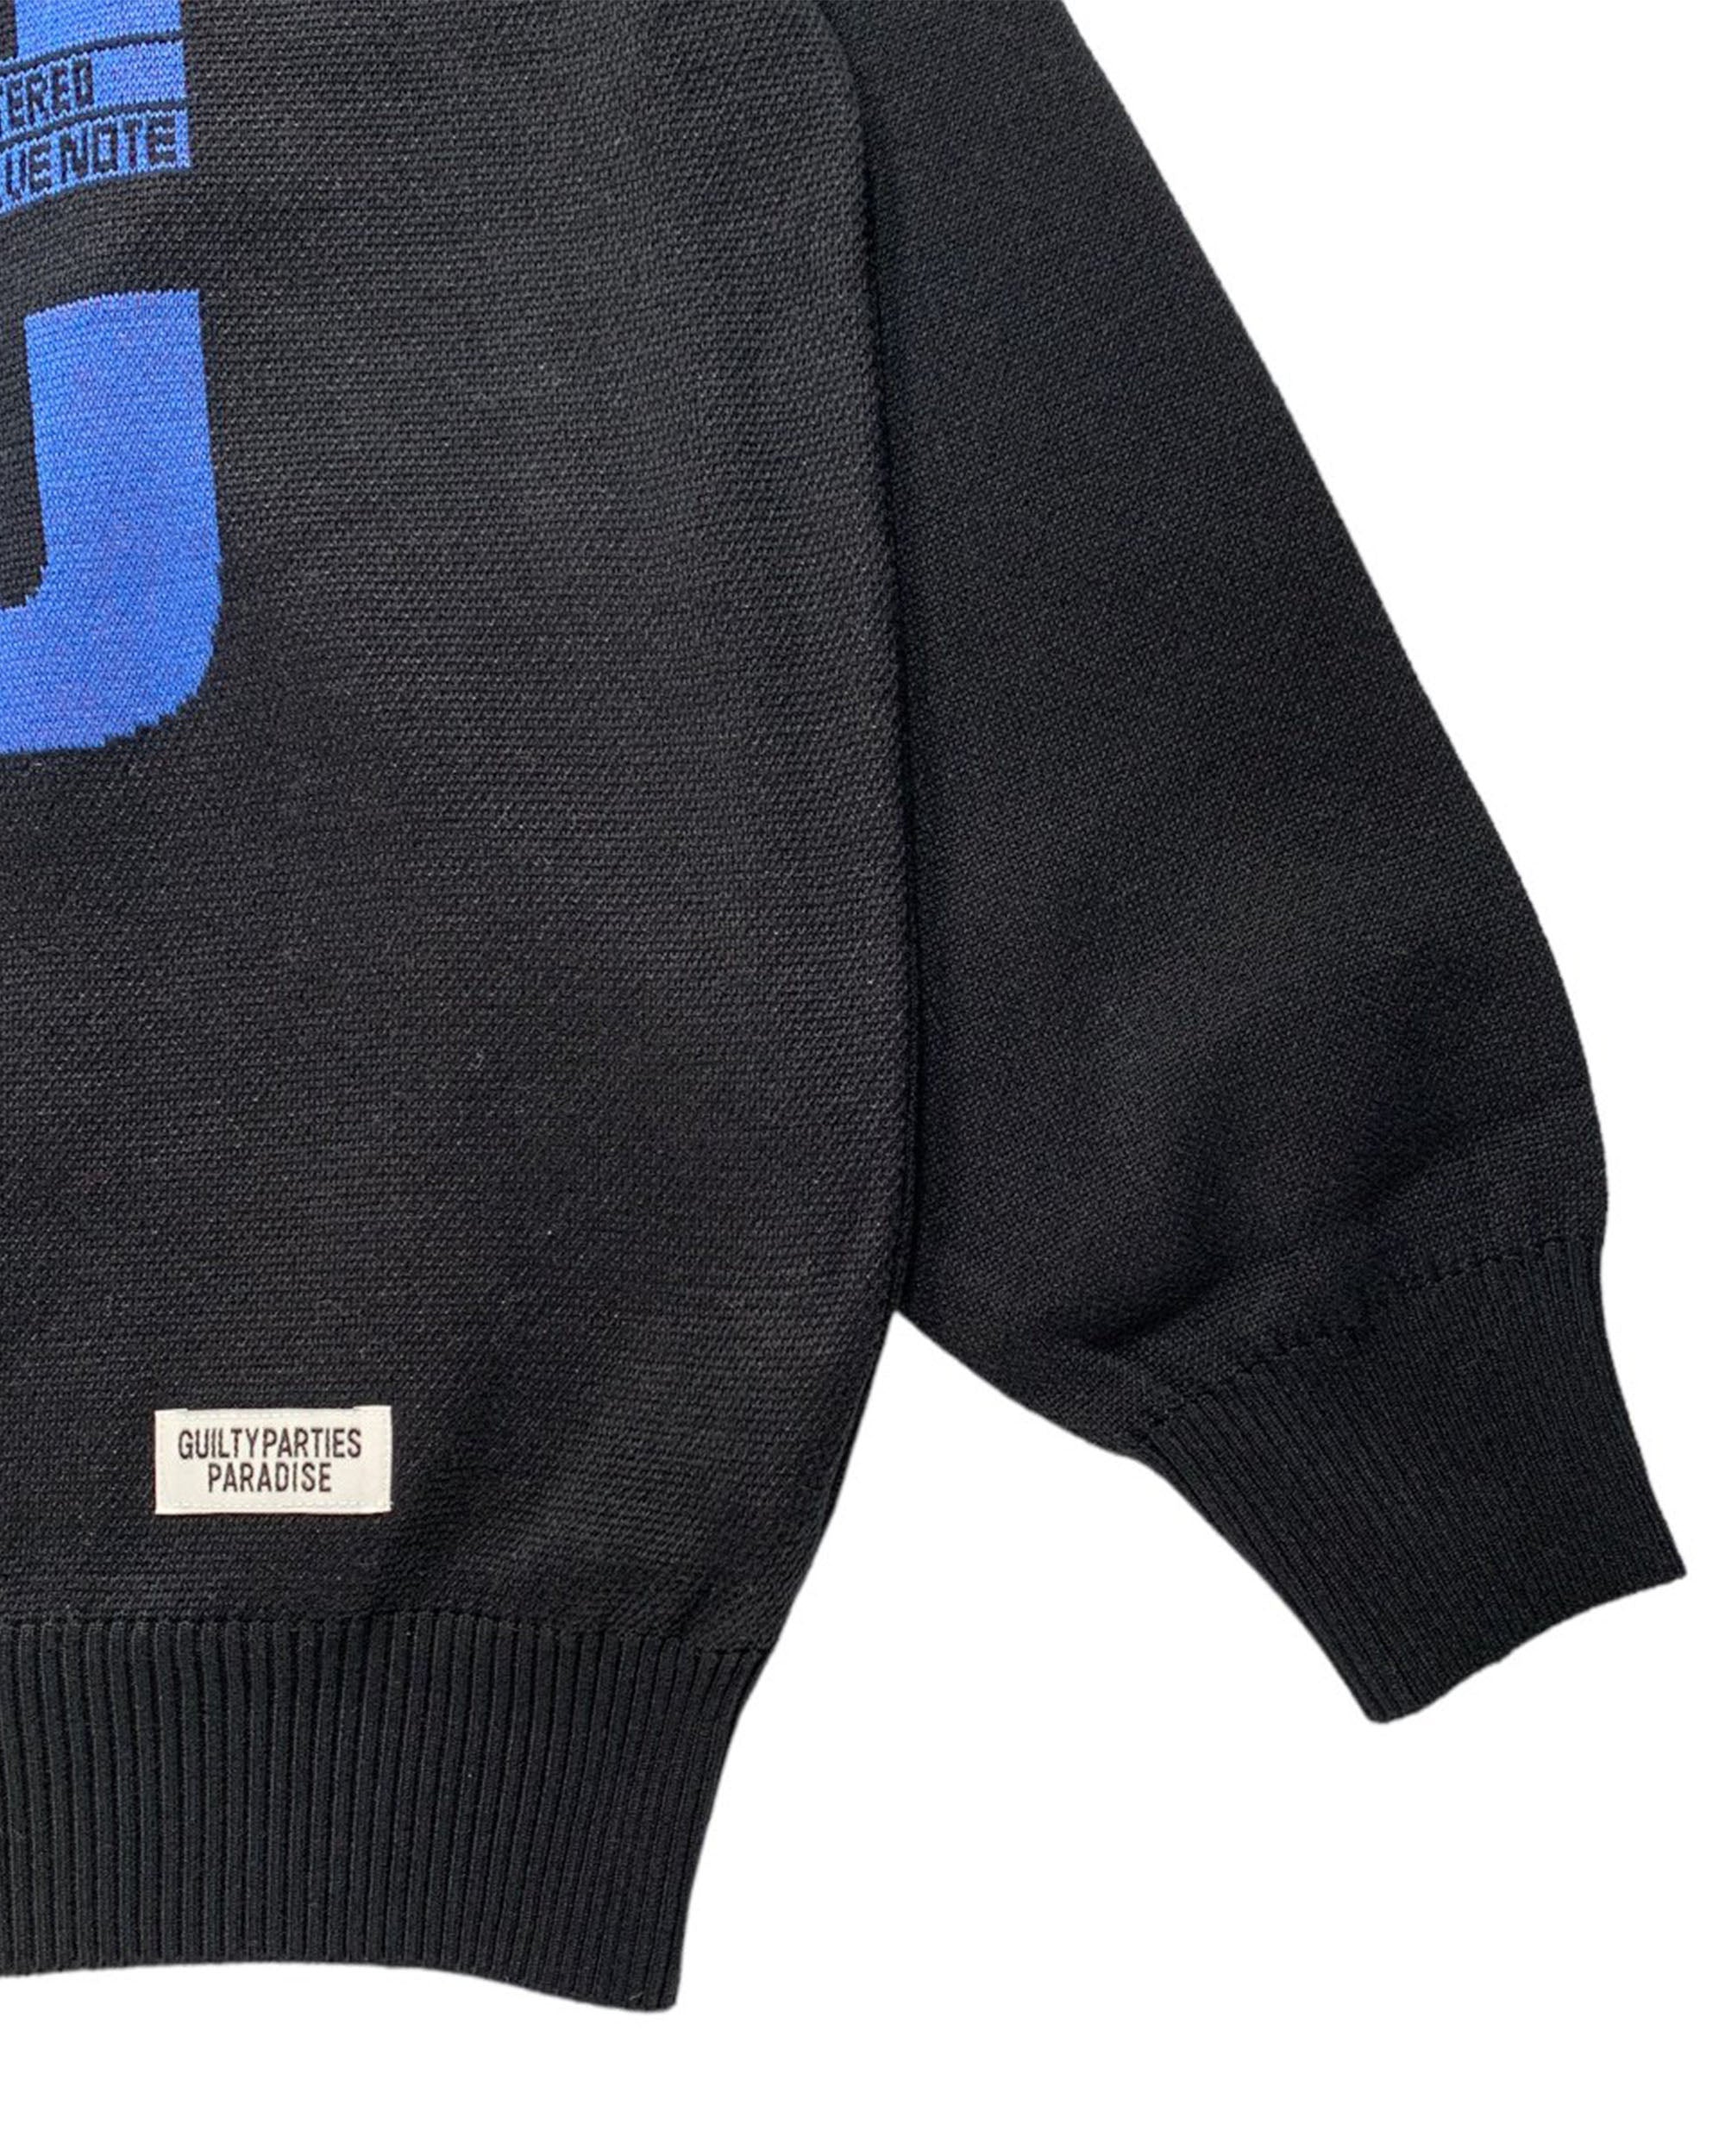 Blue Note Jacquard Sweater (Type-4) - Black